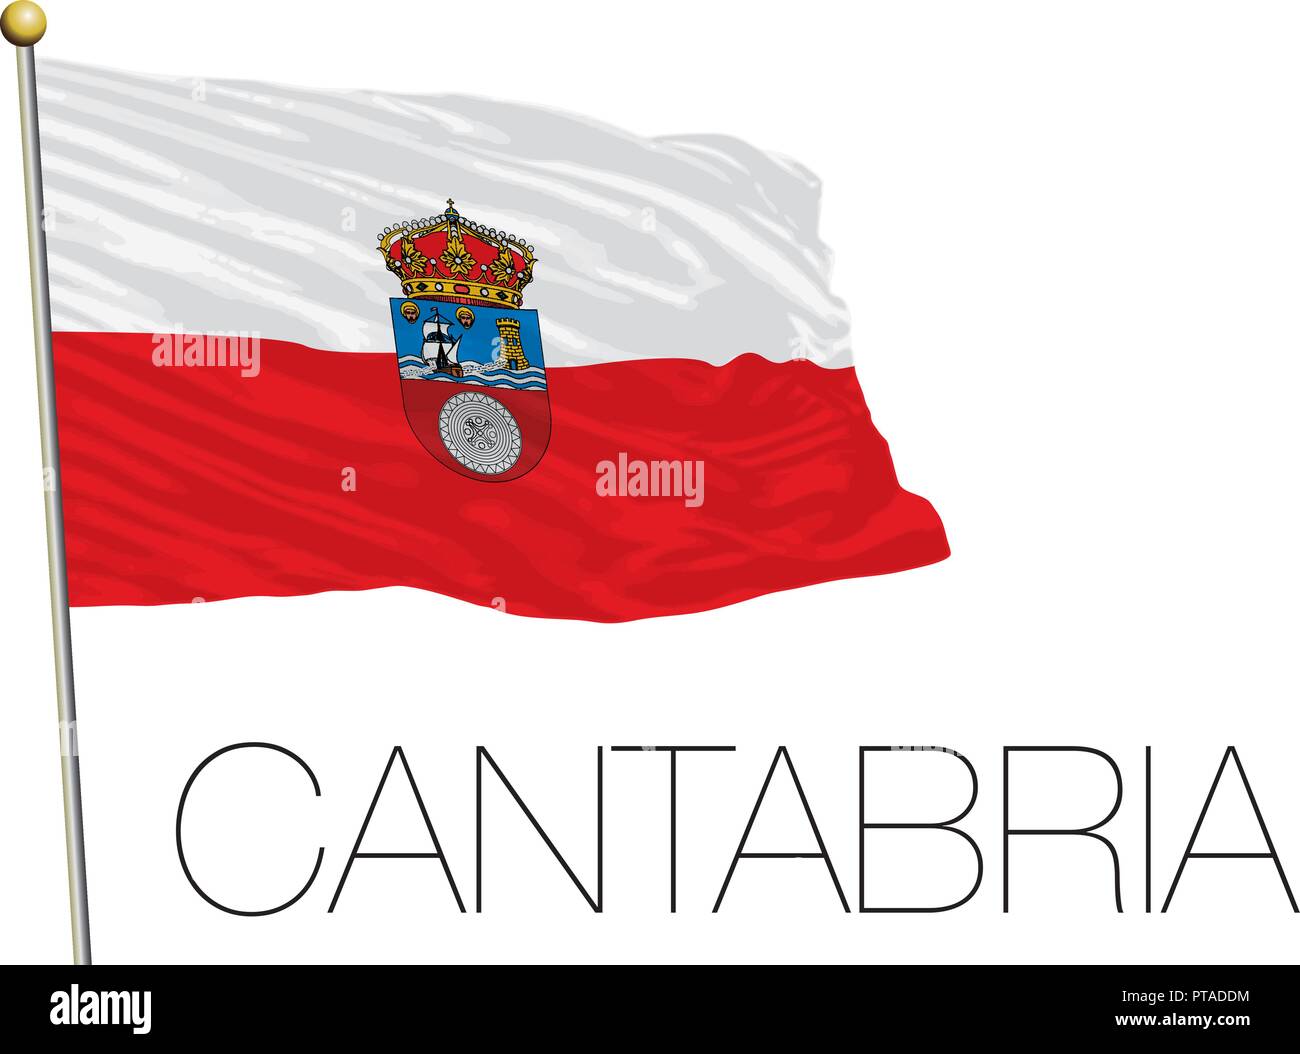 Cantabria official regional flag, Spain, vector illustration Stock Vector